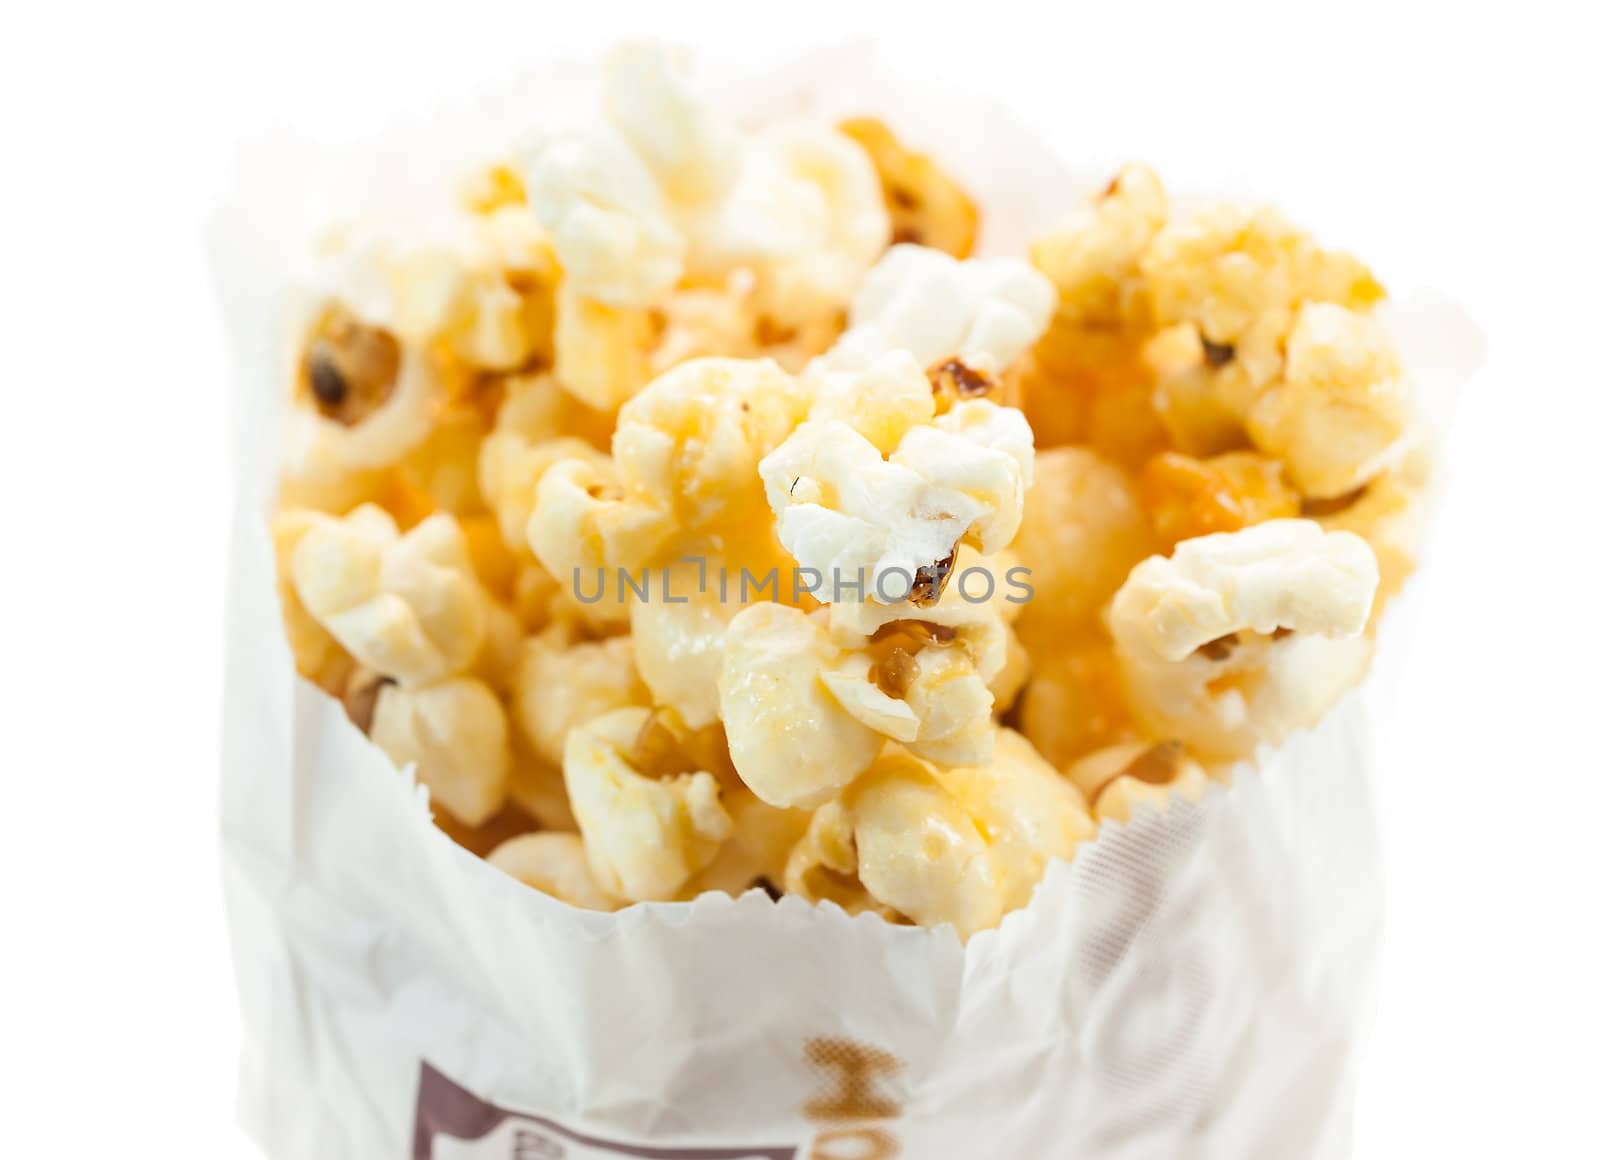 Popcorn in bag on white background by moggara12